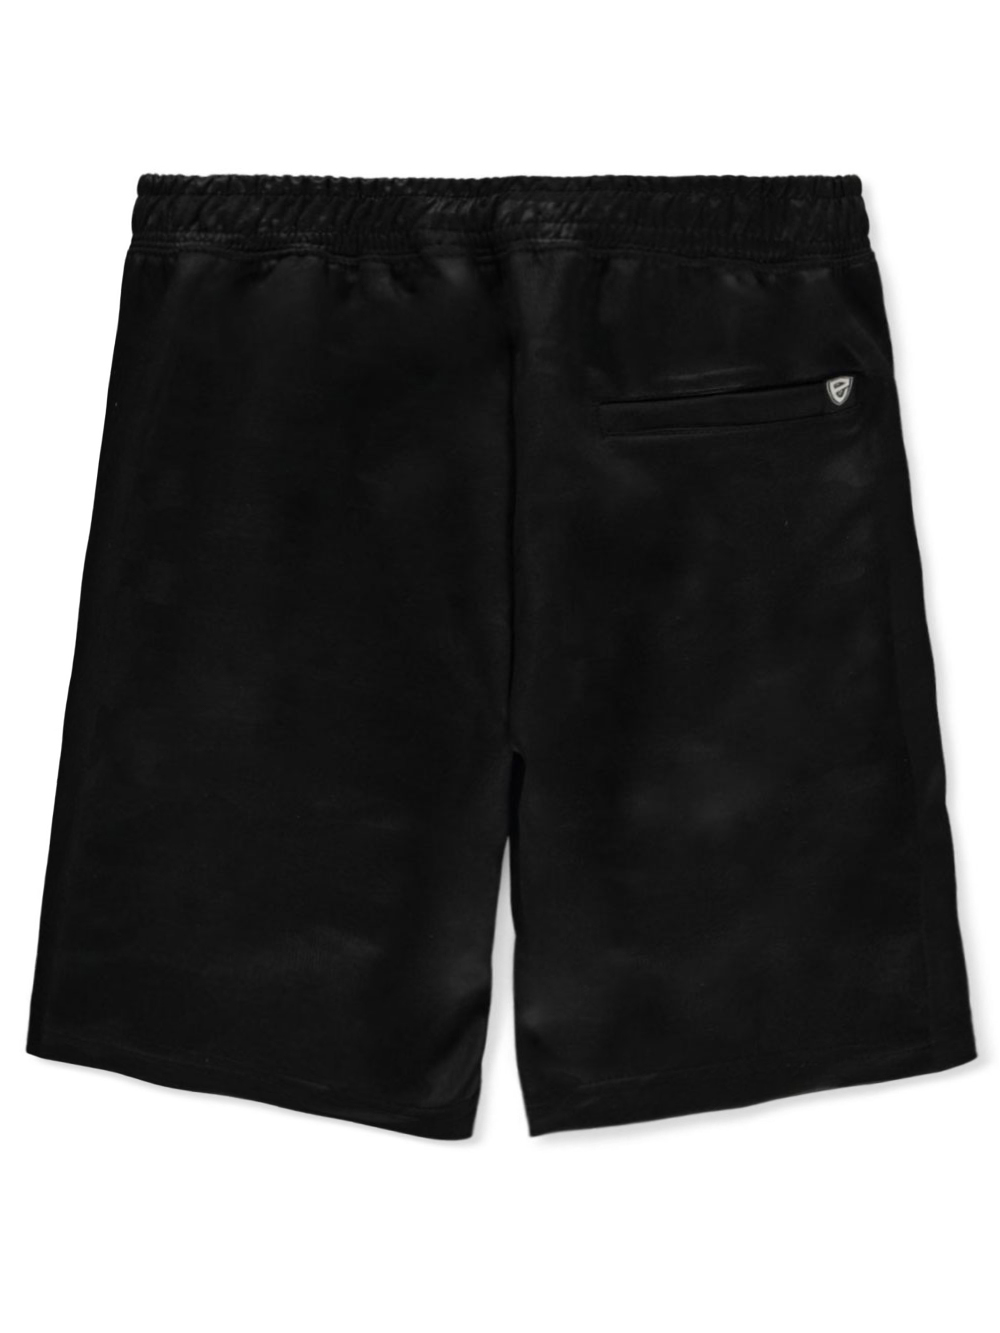 Black and Camo Shorts